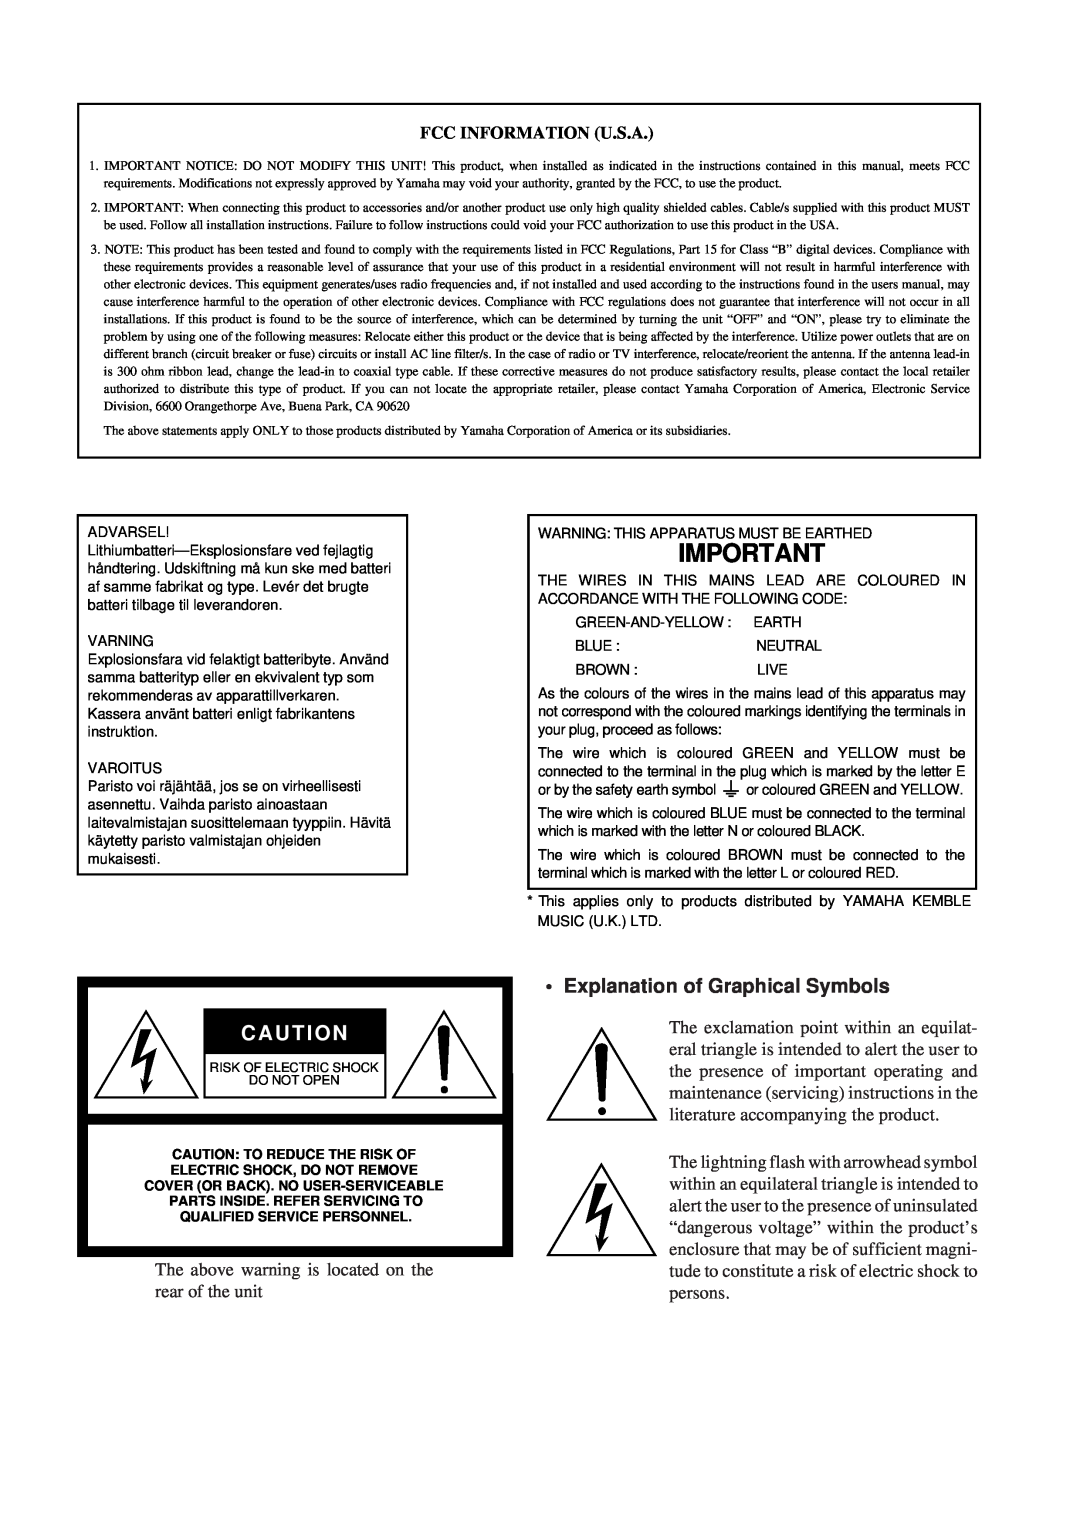 Yamaha AW4416 manual C A U T I O N, • Explanation of Graphical Symbols, Fcc Information U.S.A 